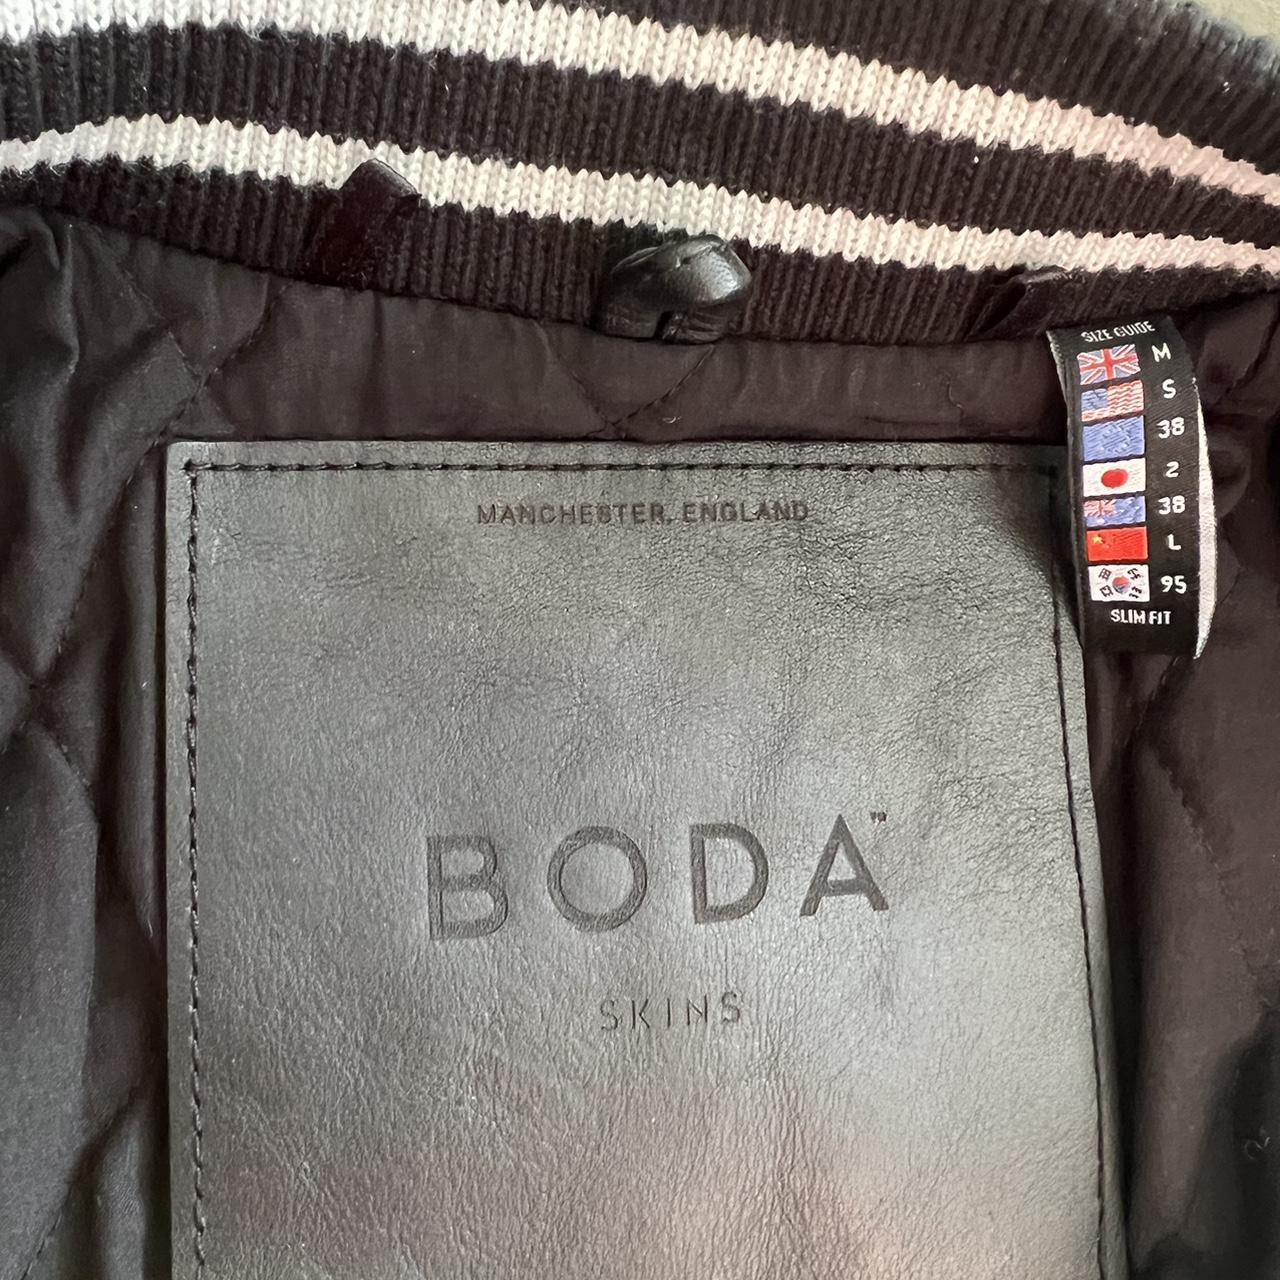 Boda Skins Men's Black and White Jacket (3)